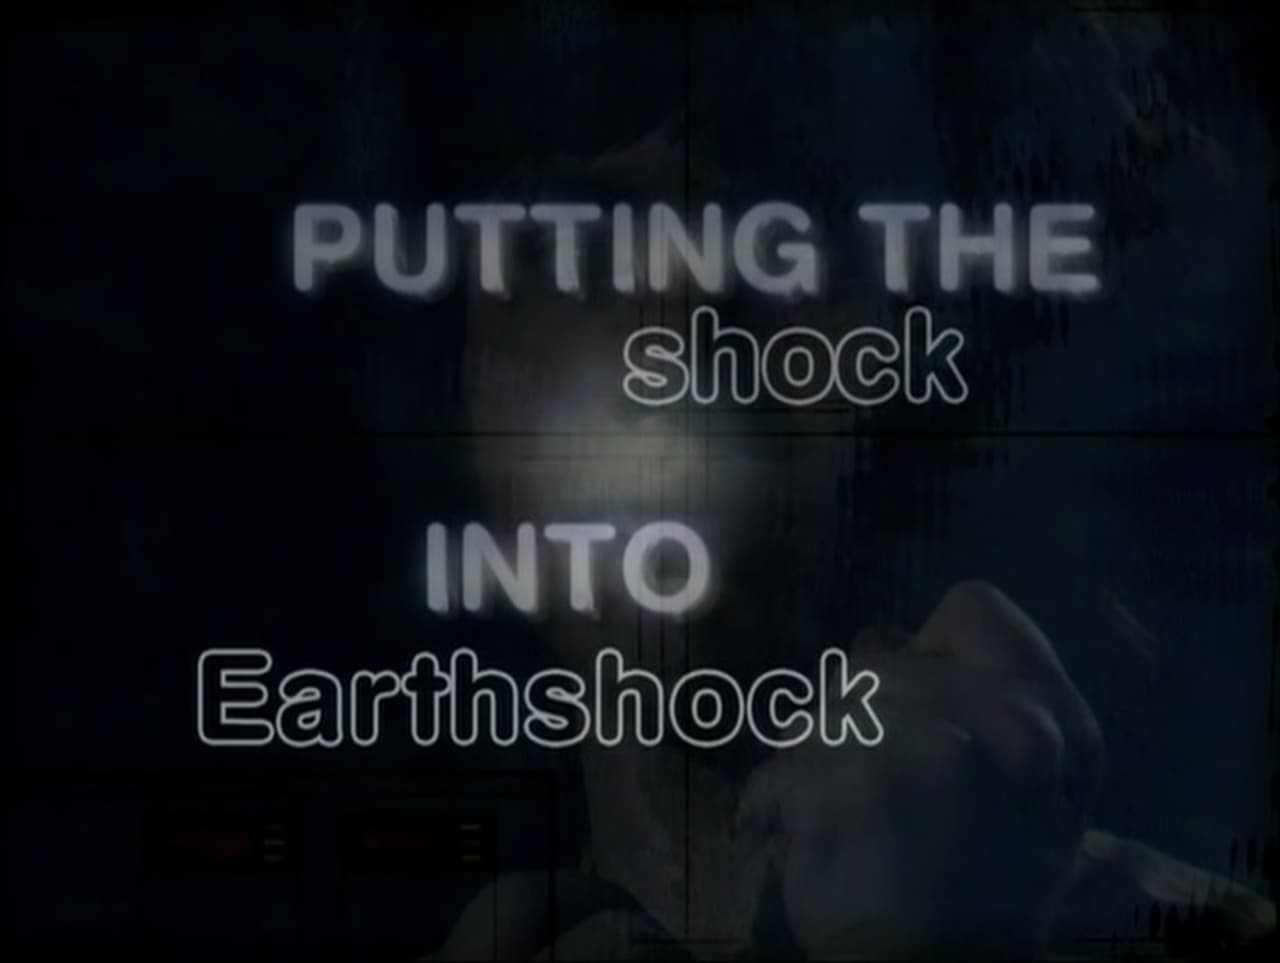 Doctor Who - Season 0 Episode 318 : Putting the shock into Earthshock